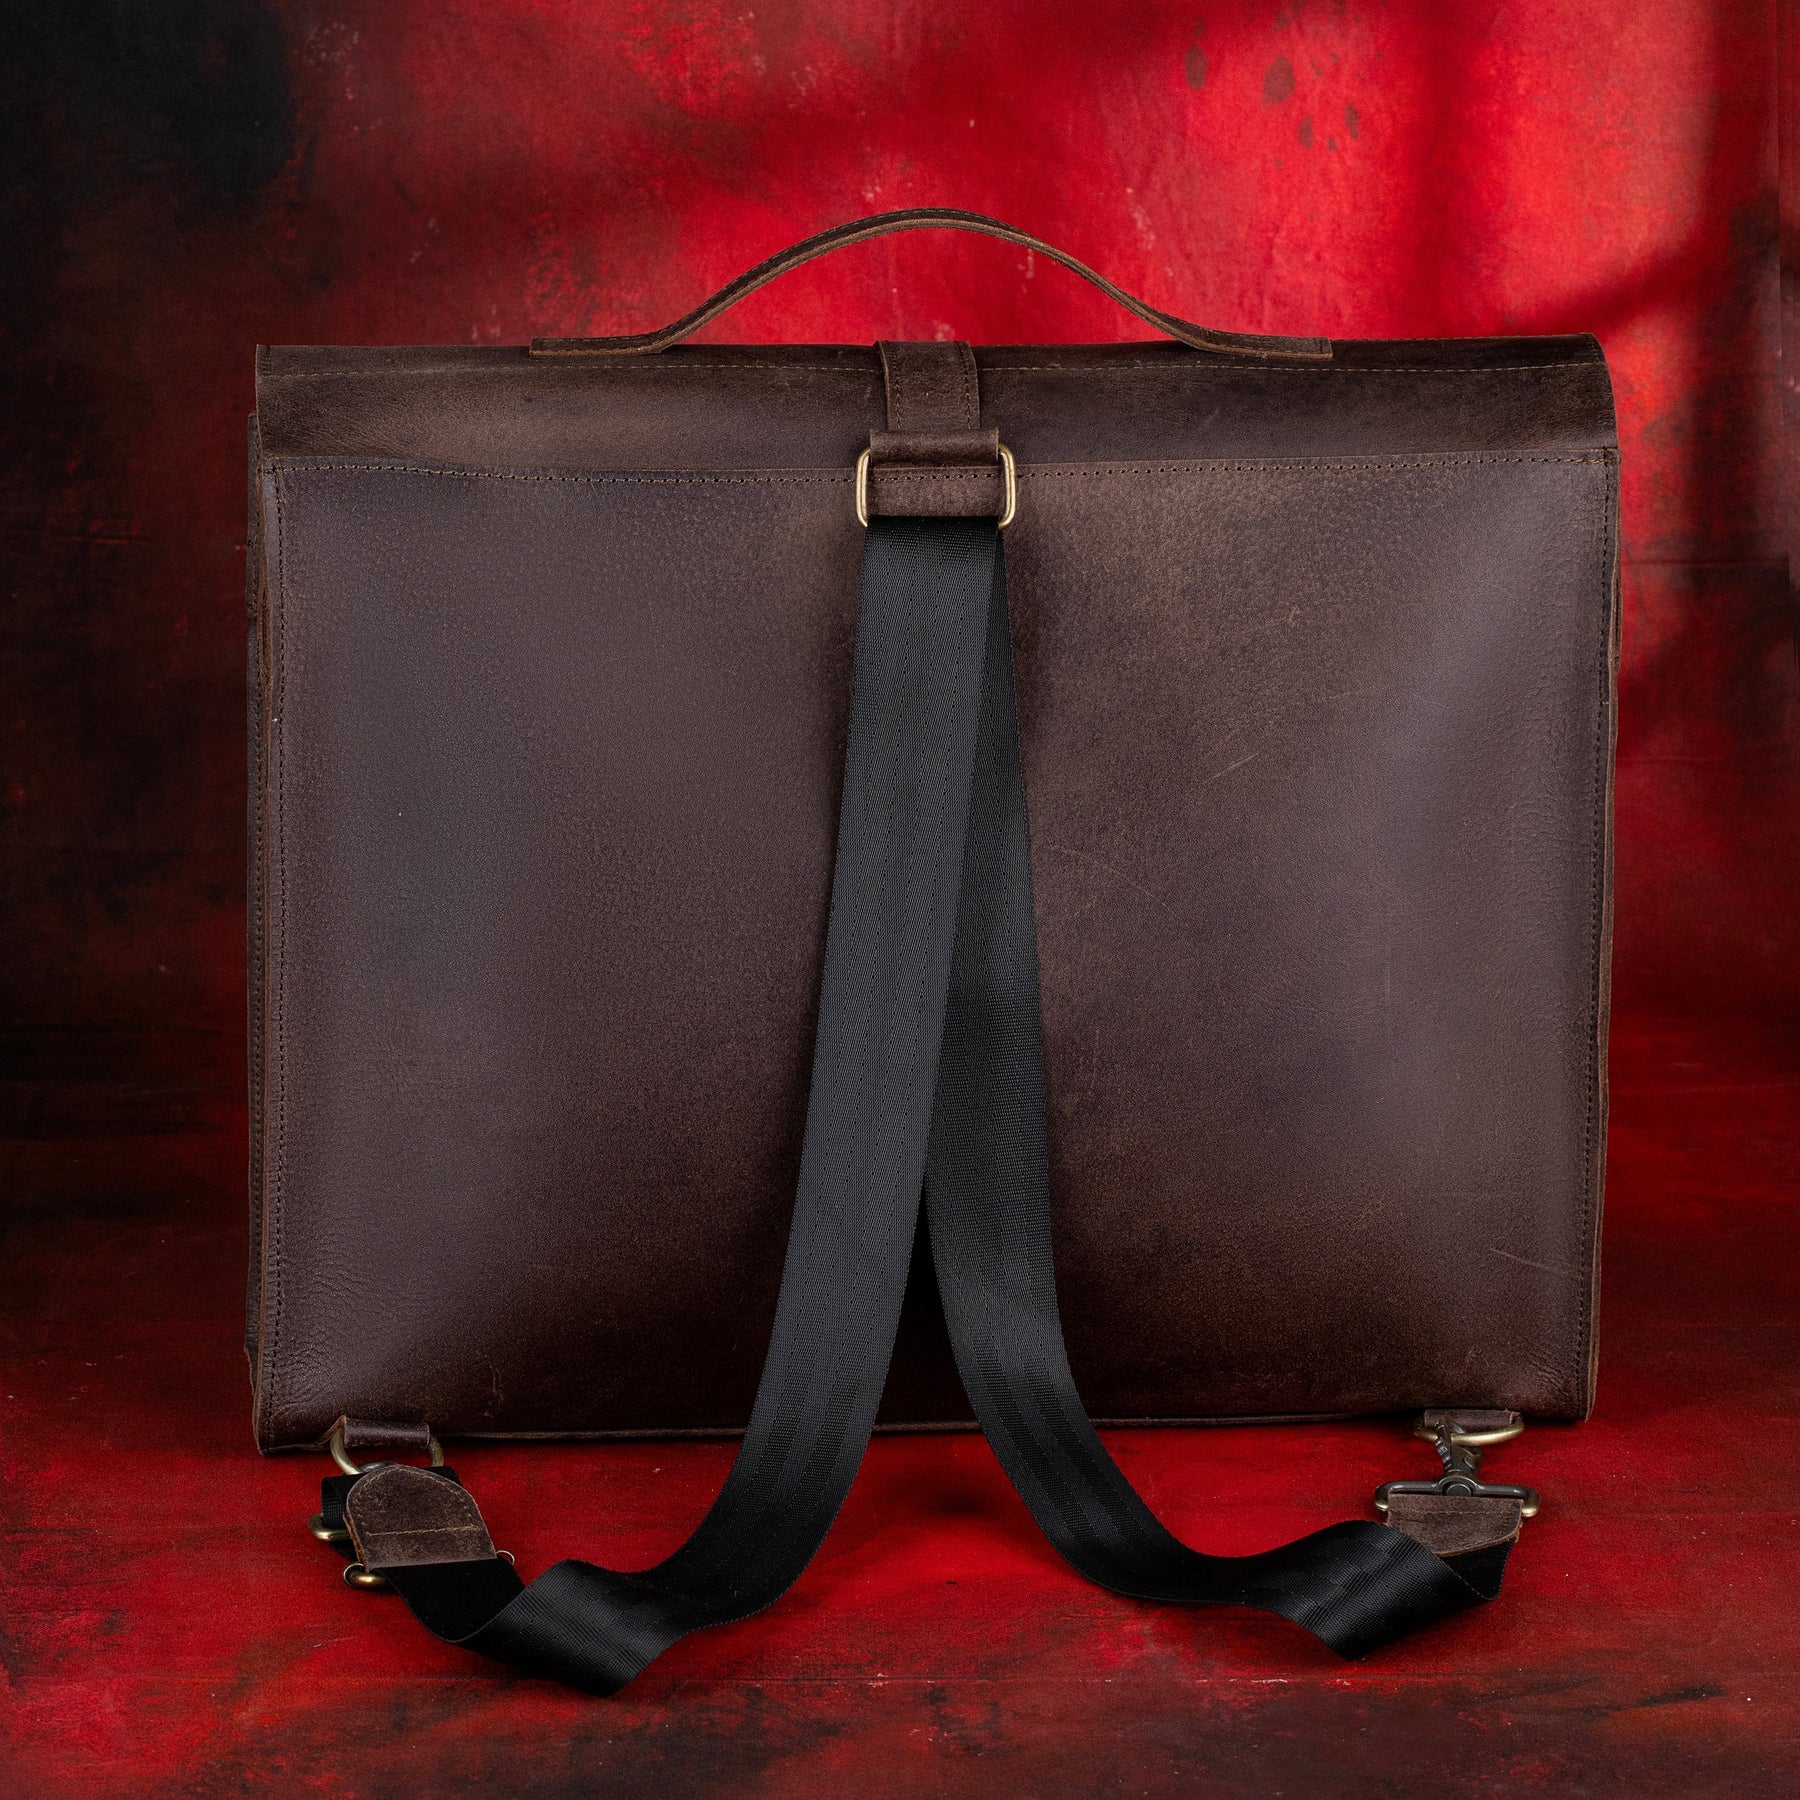 Widows Sons Briefcase - Genuine Cow Leather Convertible Bag - Bricks Masons